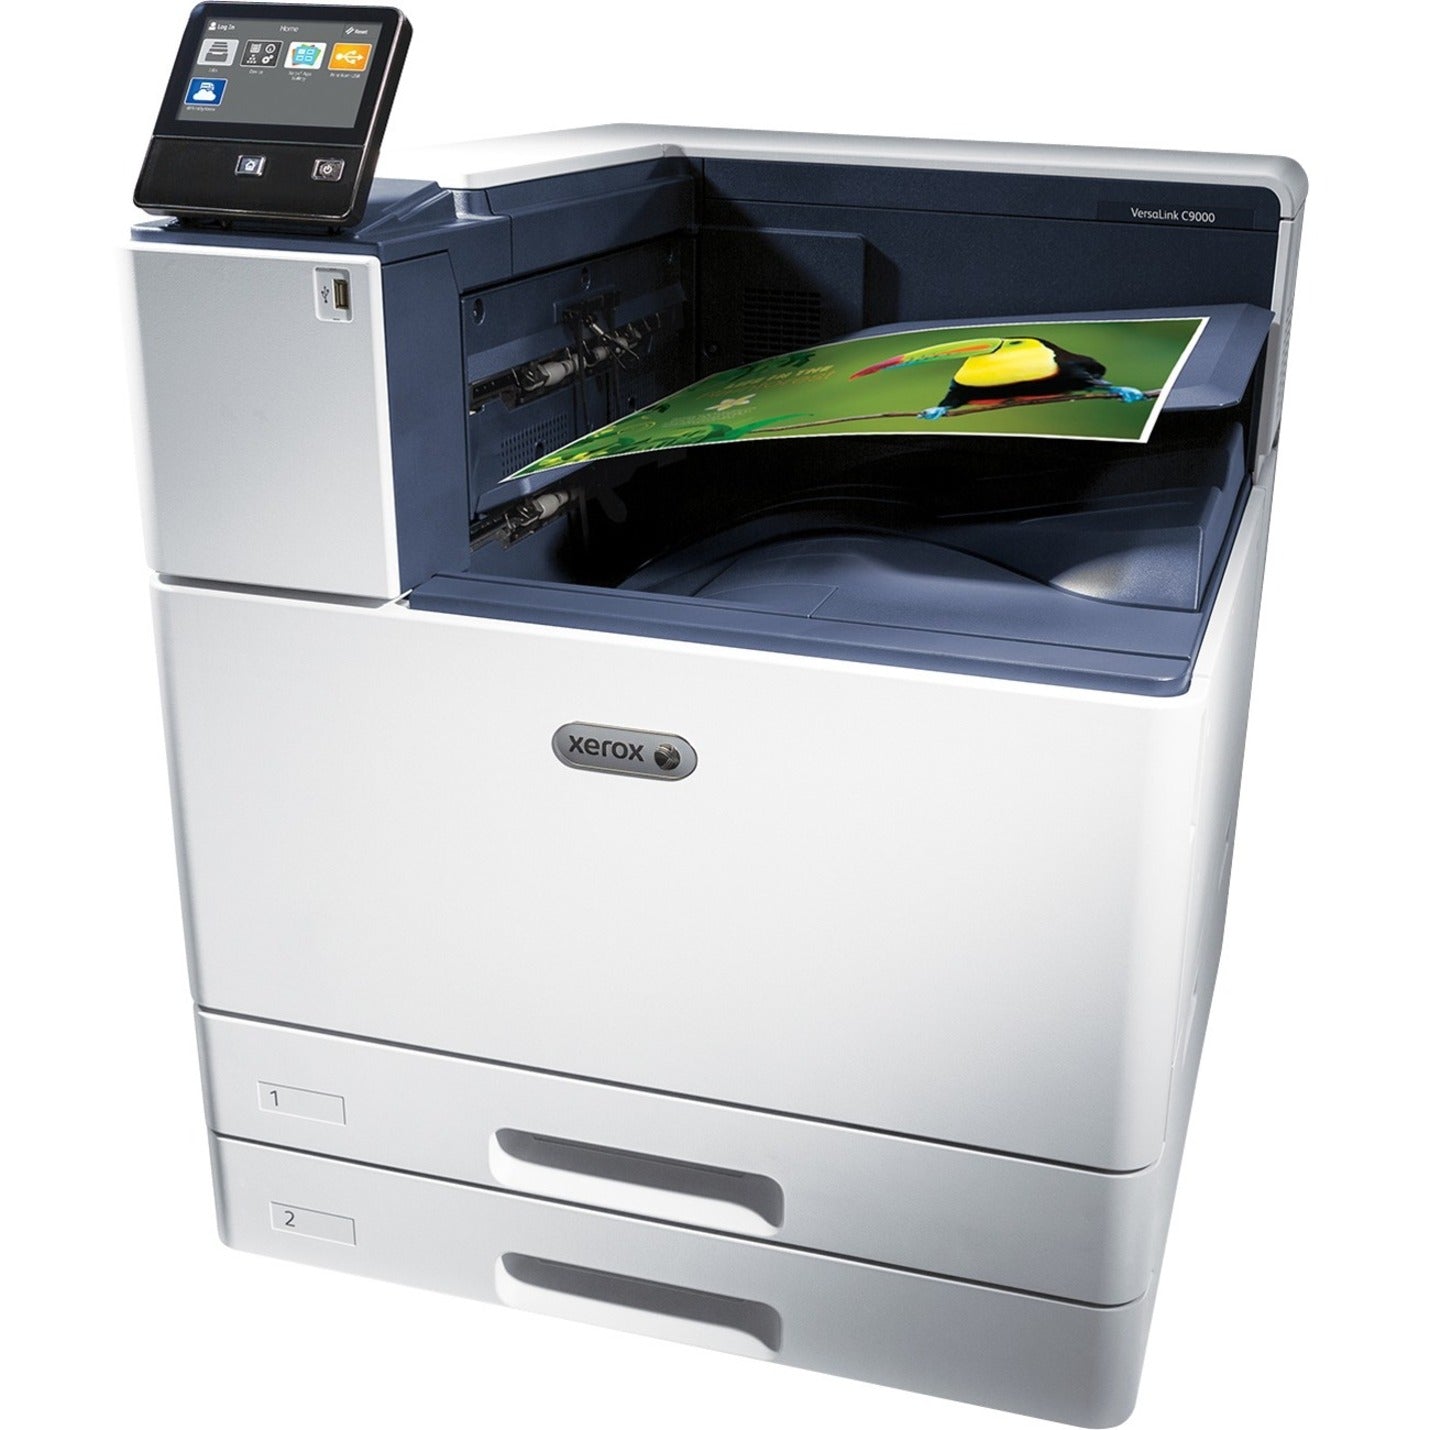 Xerox C9000/YDT VersaLink Color Printer, Floor Standing LED Printer - Color